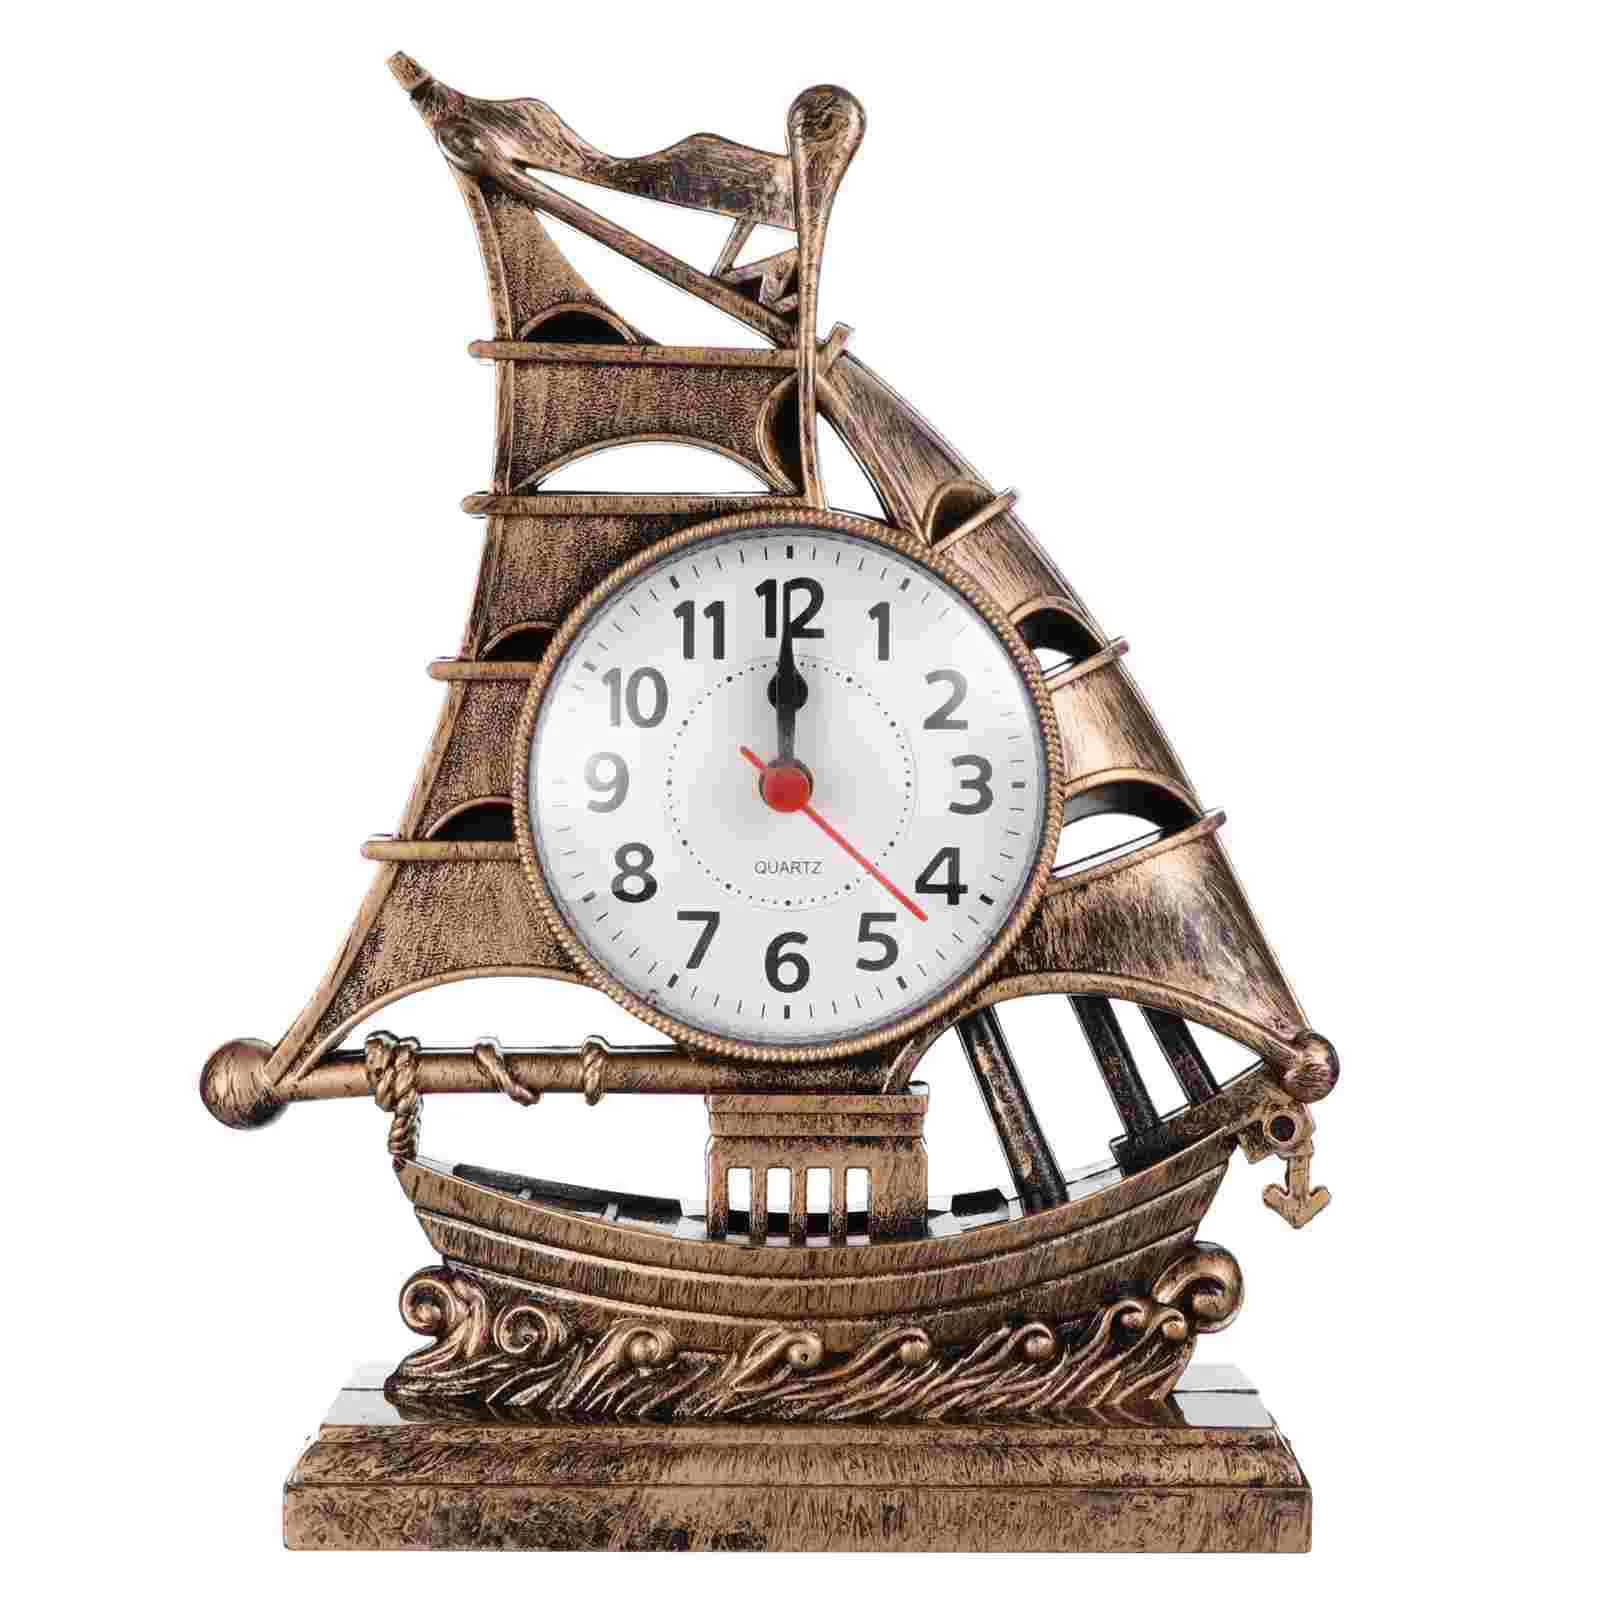 

Clock Alarm Sailboat Table Vintage Retro Desk Model Ornament Nautical Figure Clocks Boat Bedside Silent Decoration Sailing